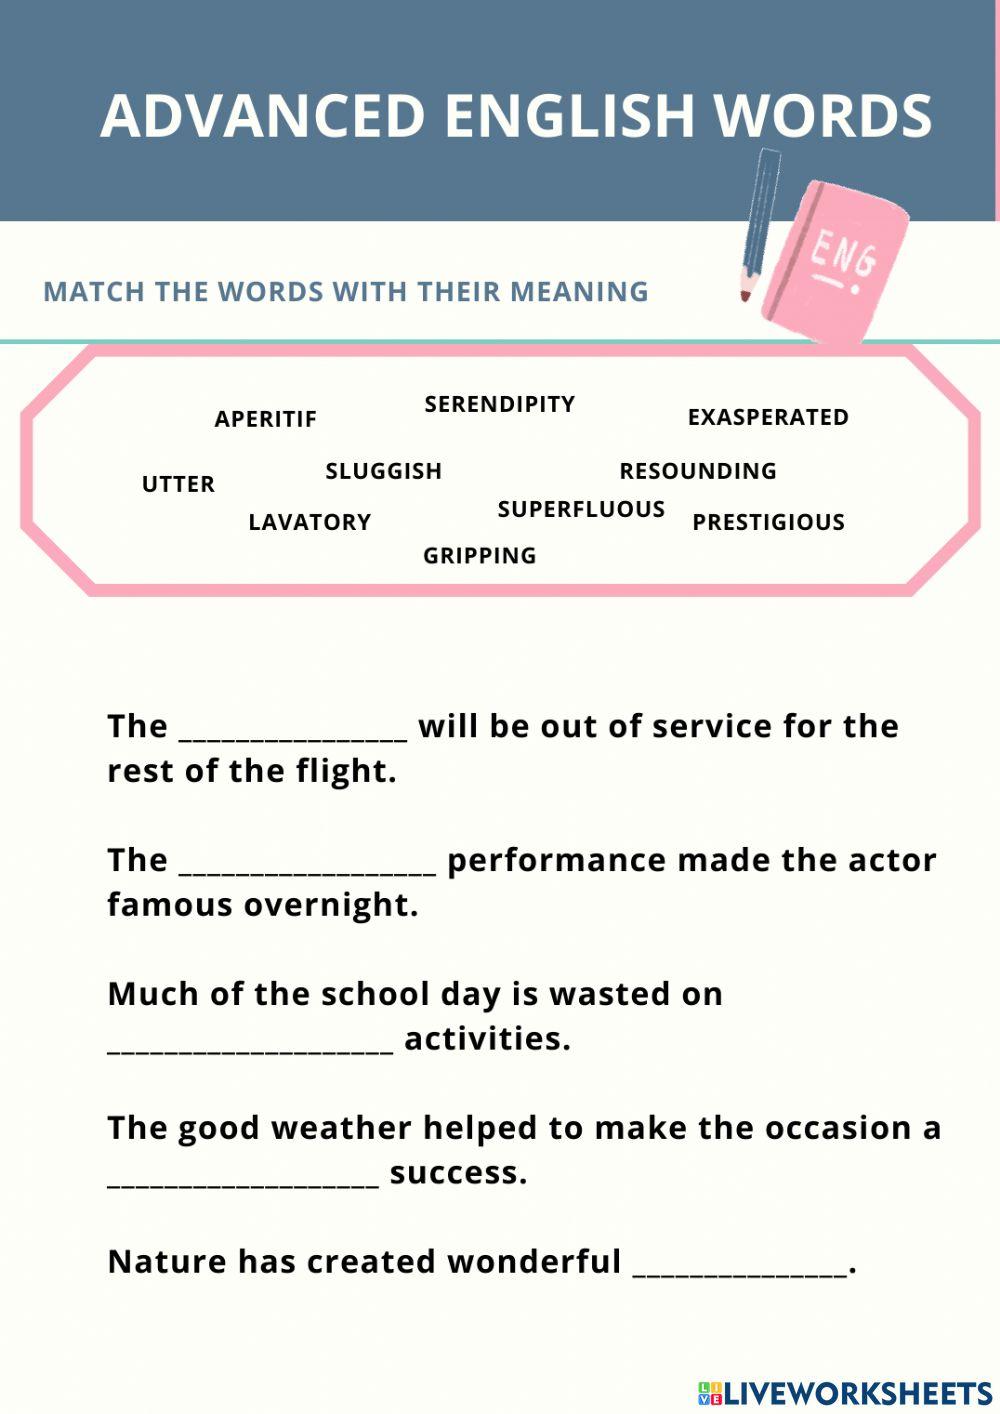 Advanced English words